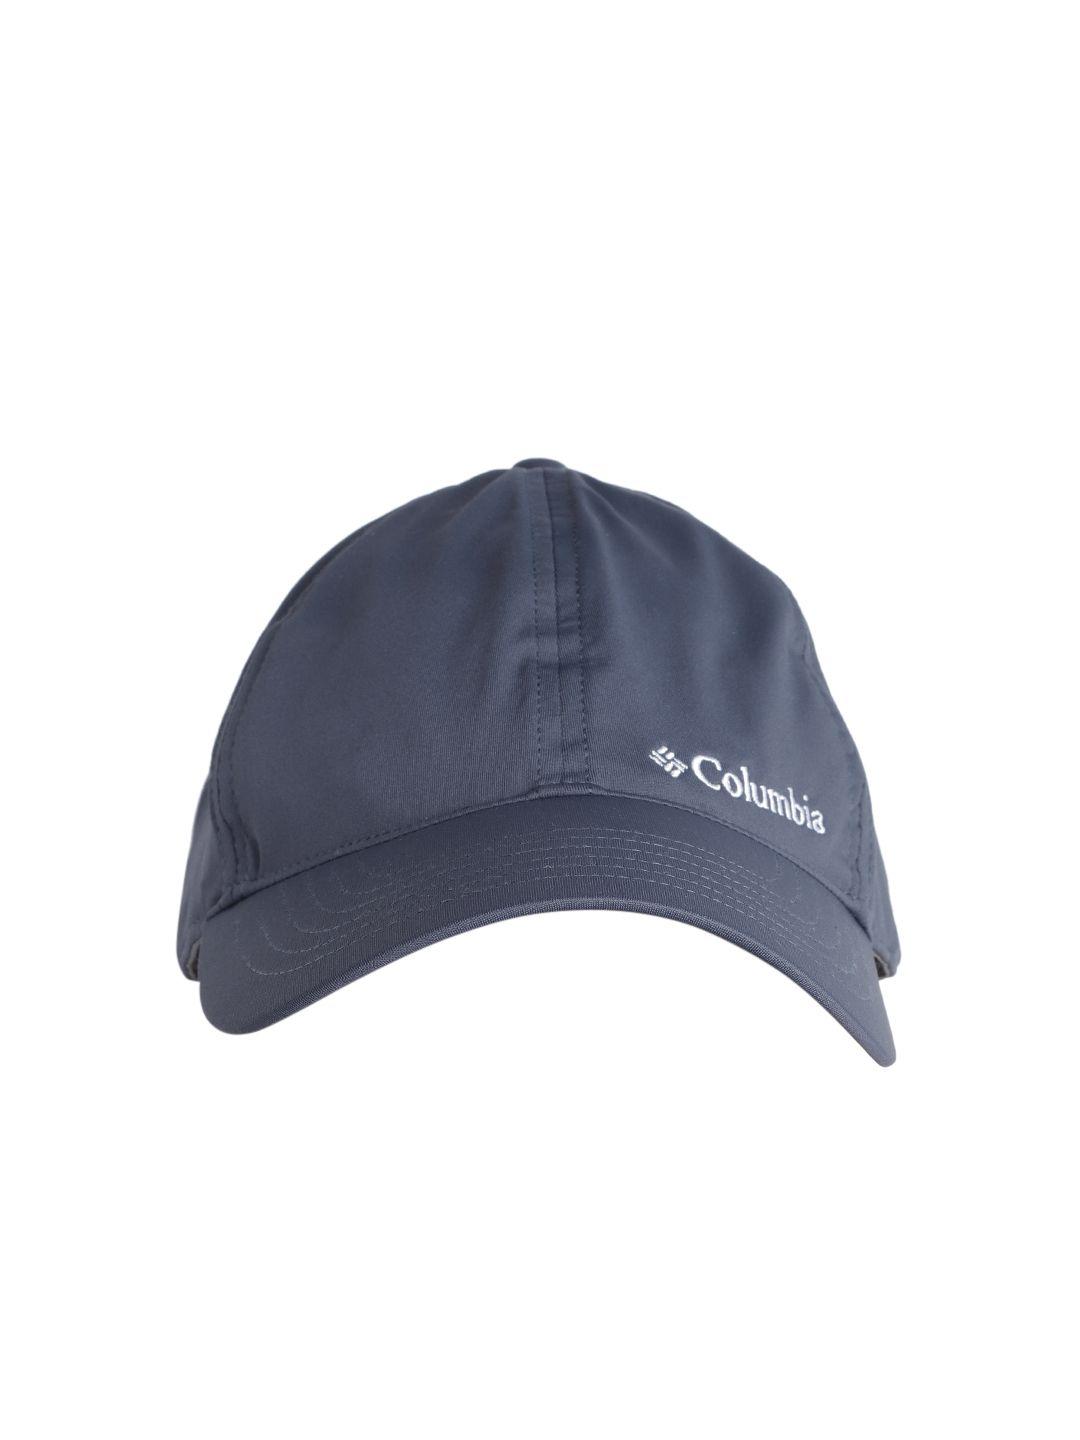 columbia unisex navy blue & white brand logo embroidered snapback cap